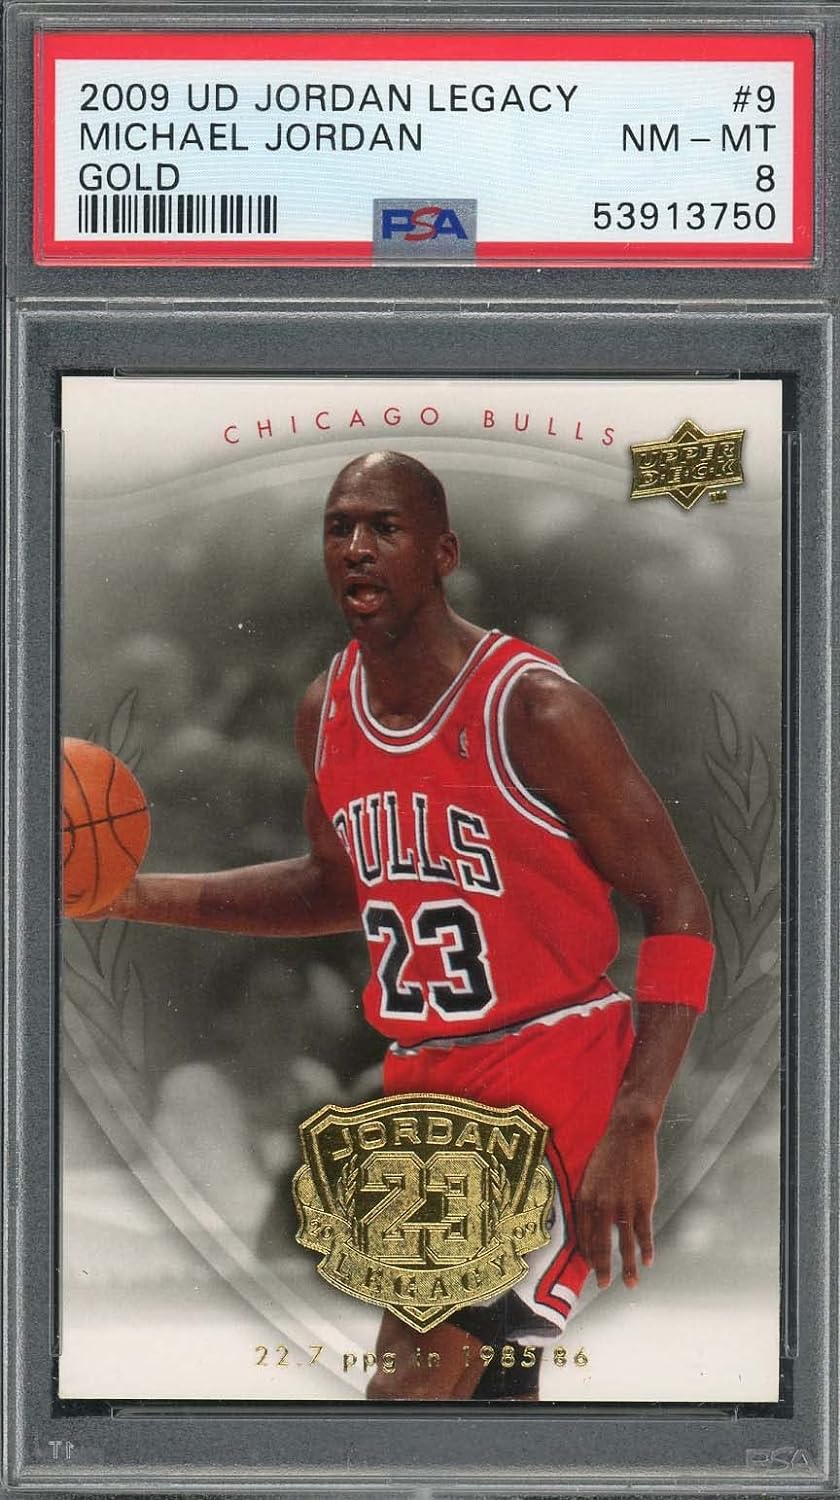 Michael Jordan 2009 Upper Deck Legacy Gold Basketball Card #9 Graded P